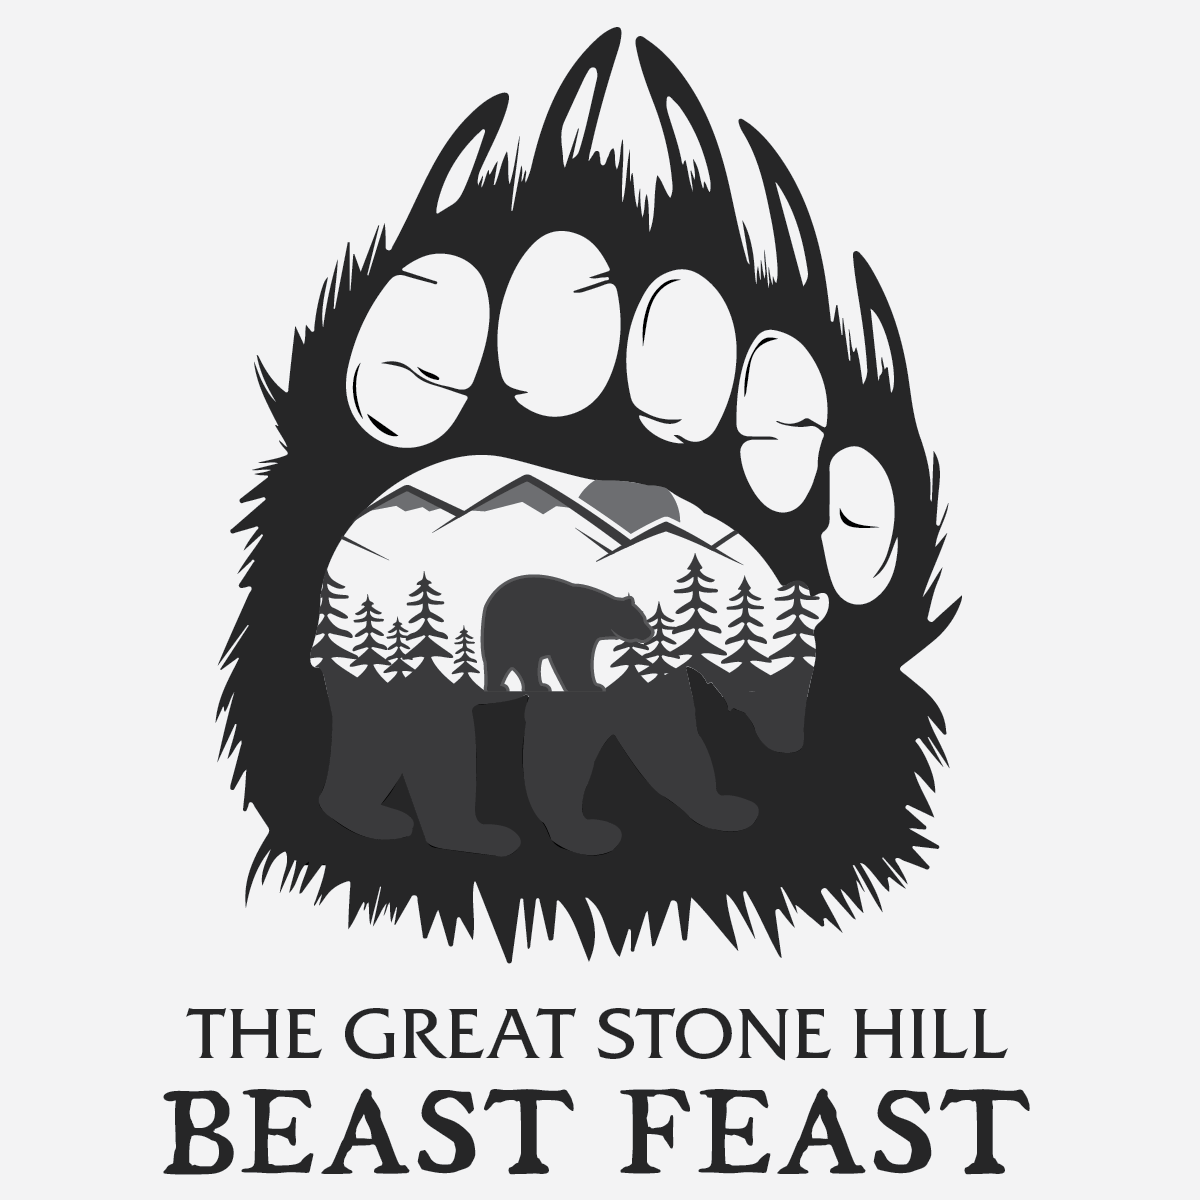 Stone Hill Beast-Feast